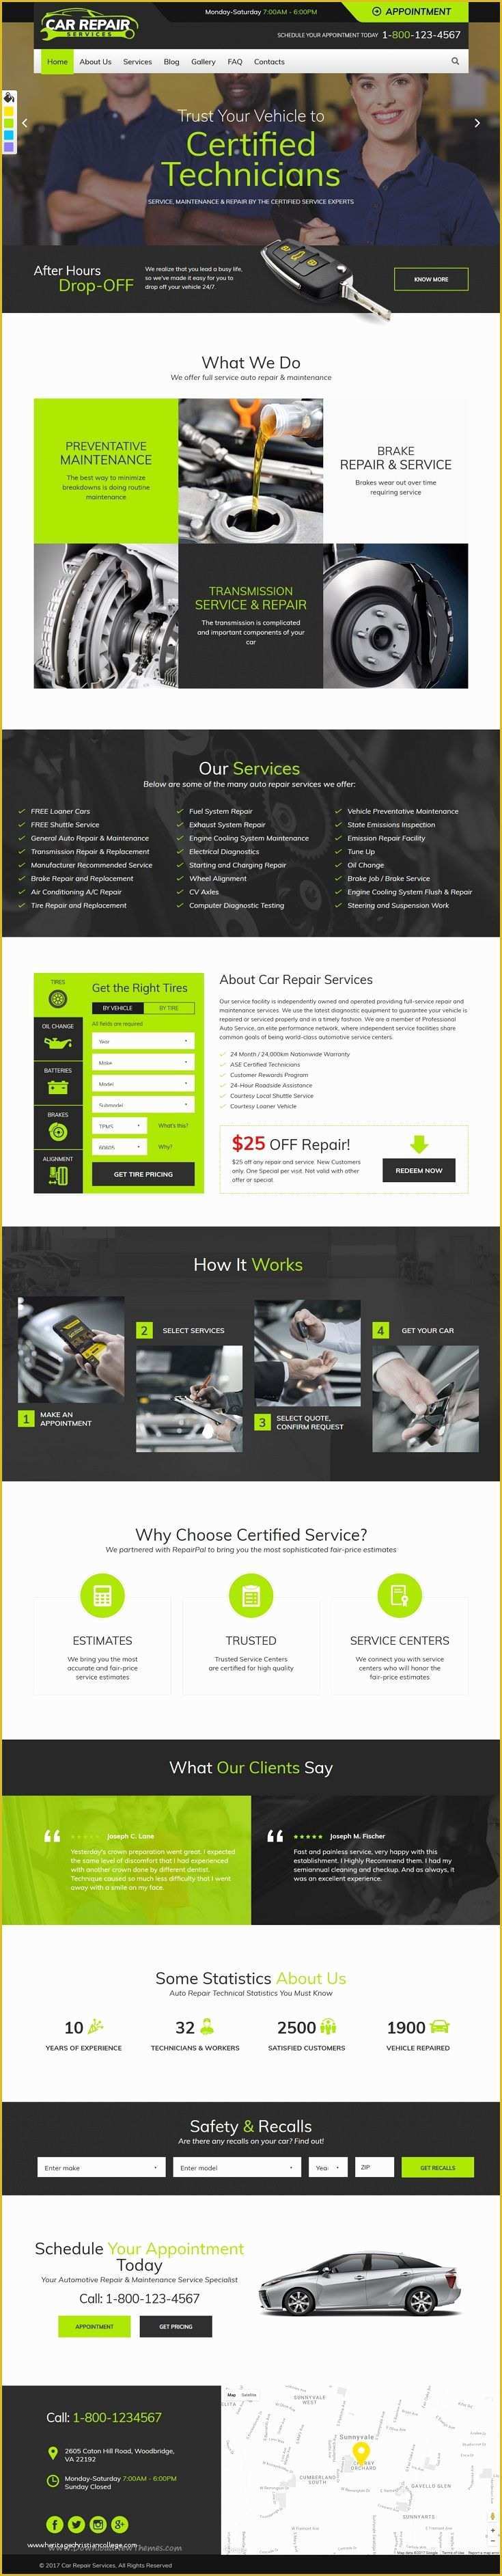 Auto Parts Website Template Free Of Best 25 Car Repair Service Ideas On Pinterest